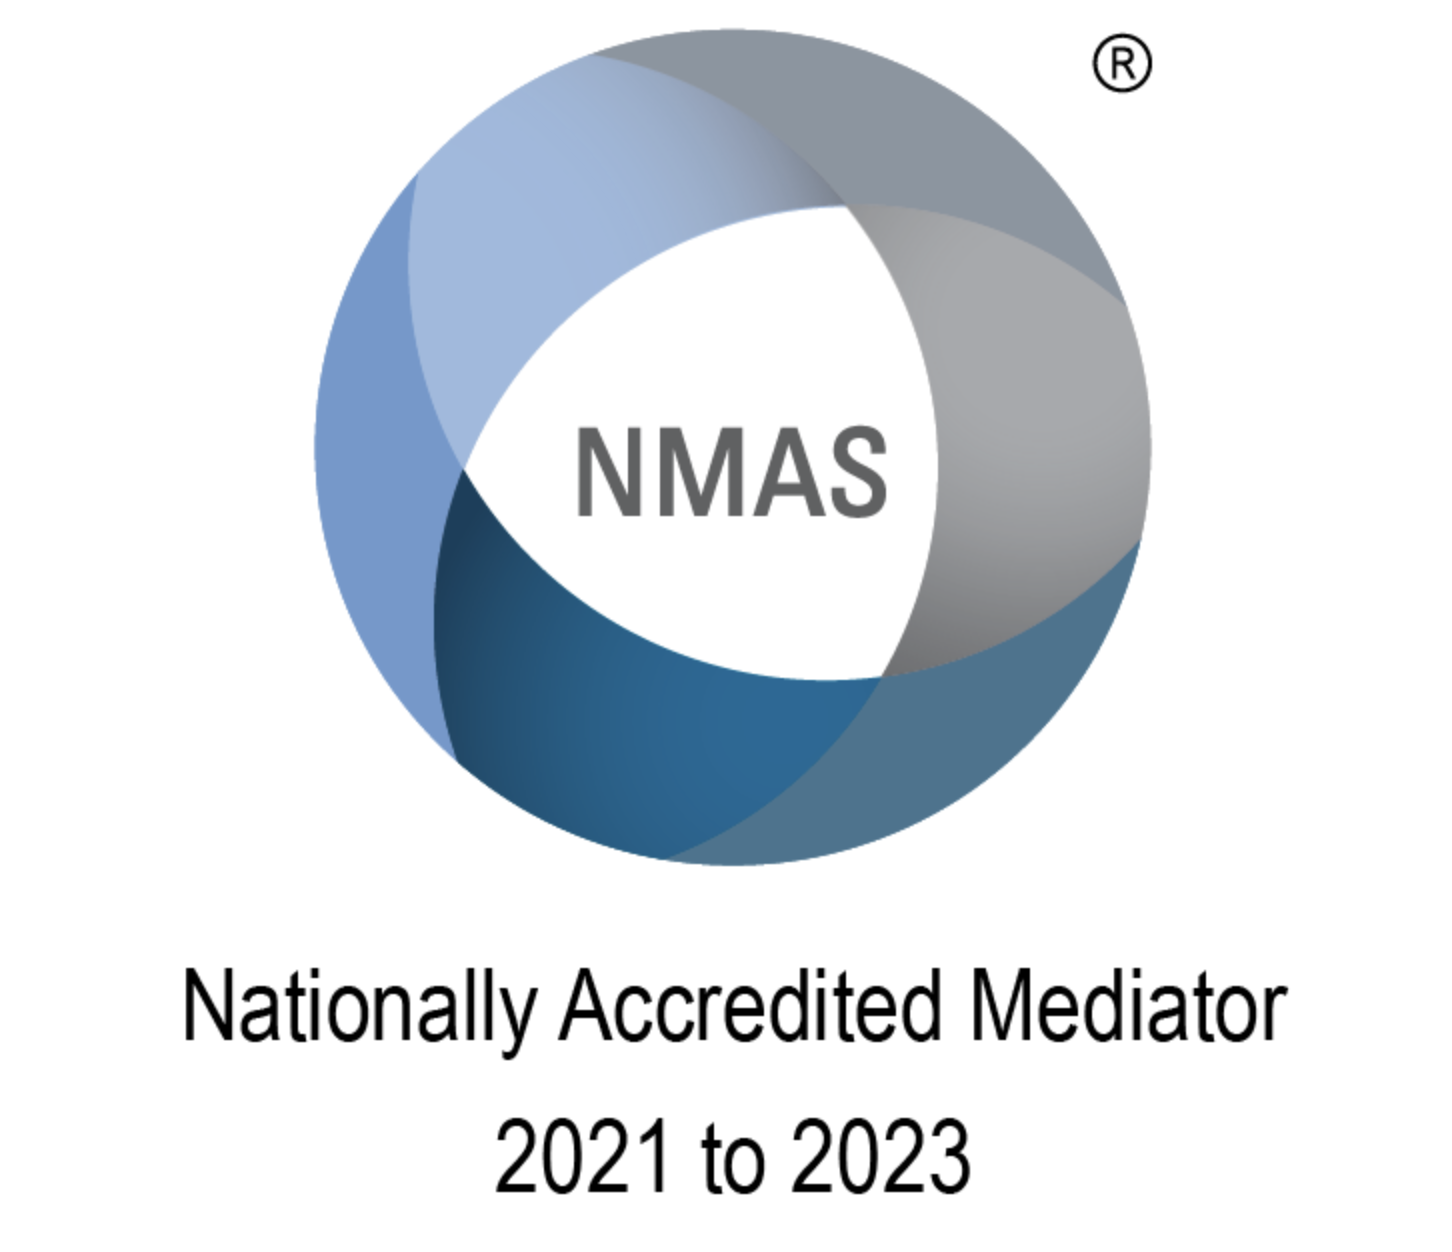 NMAS logo - Nationally Accredited Mediator 2021-2023